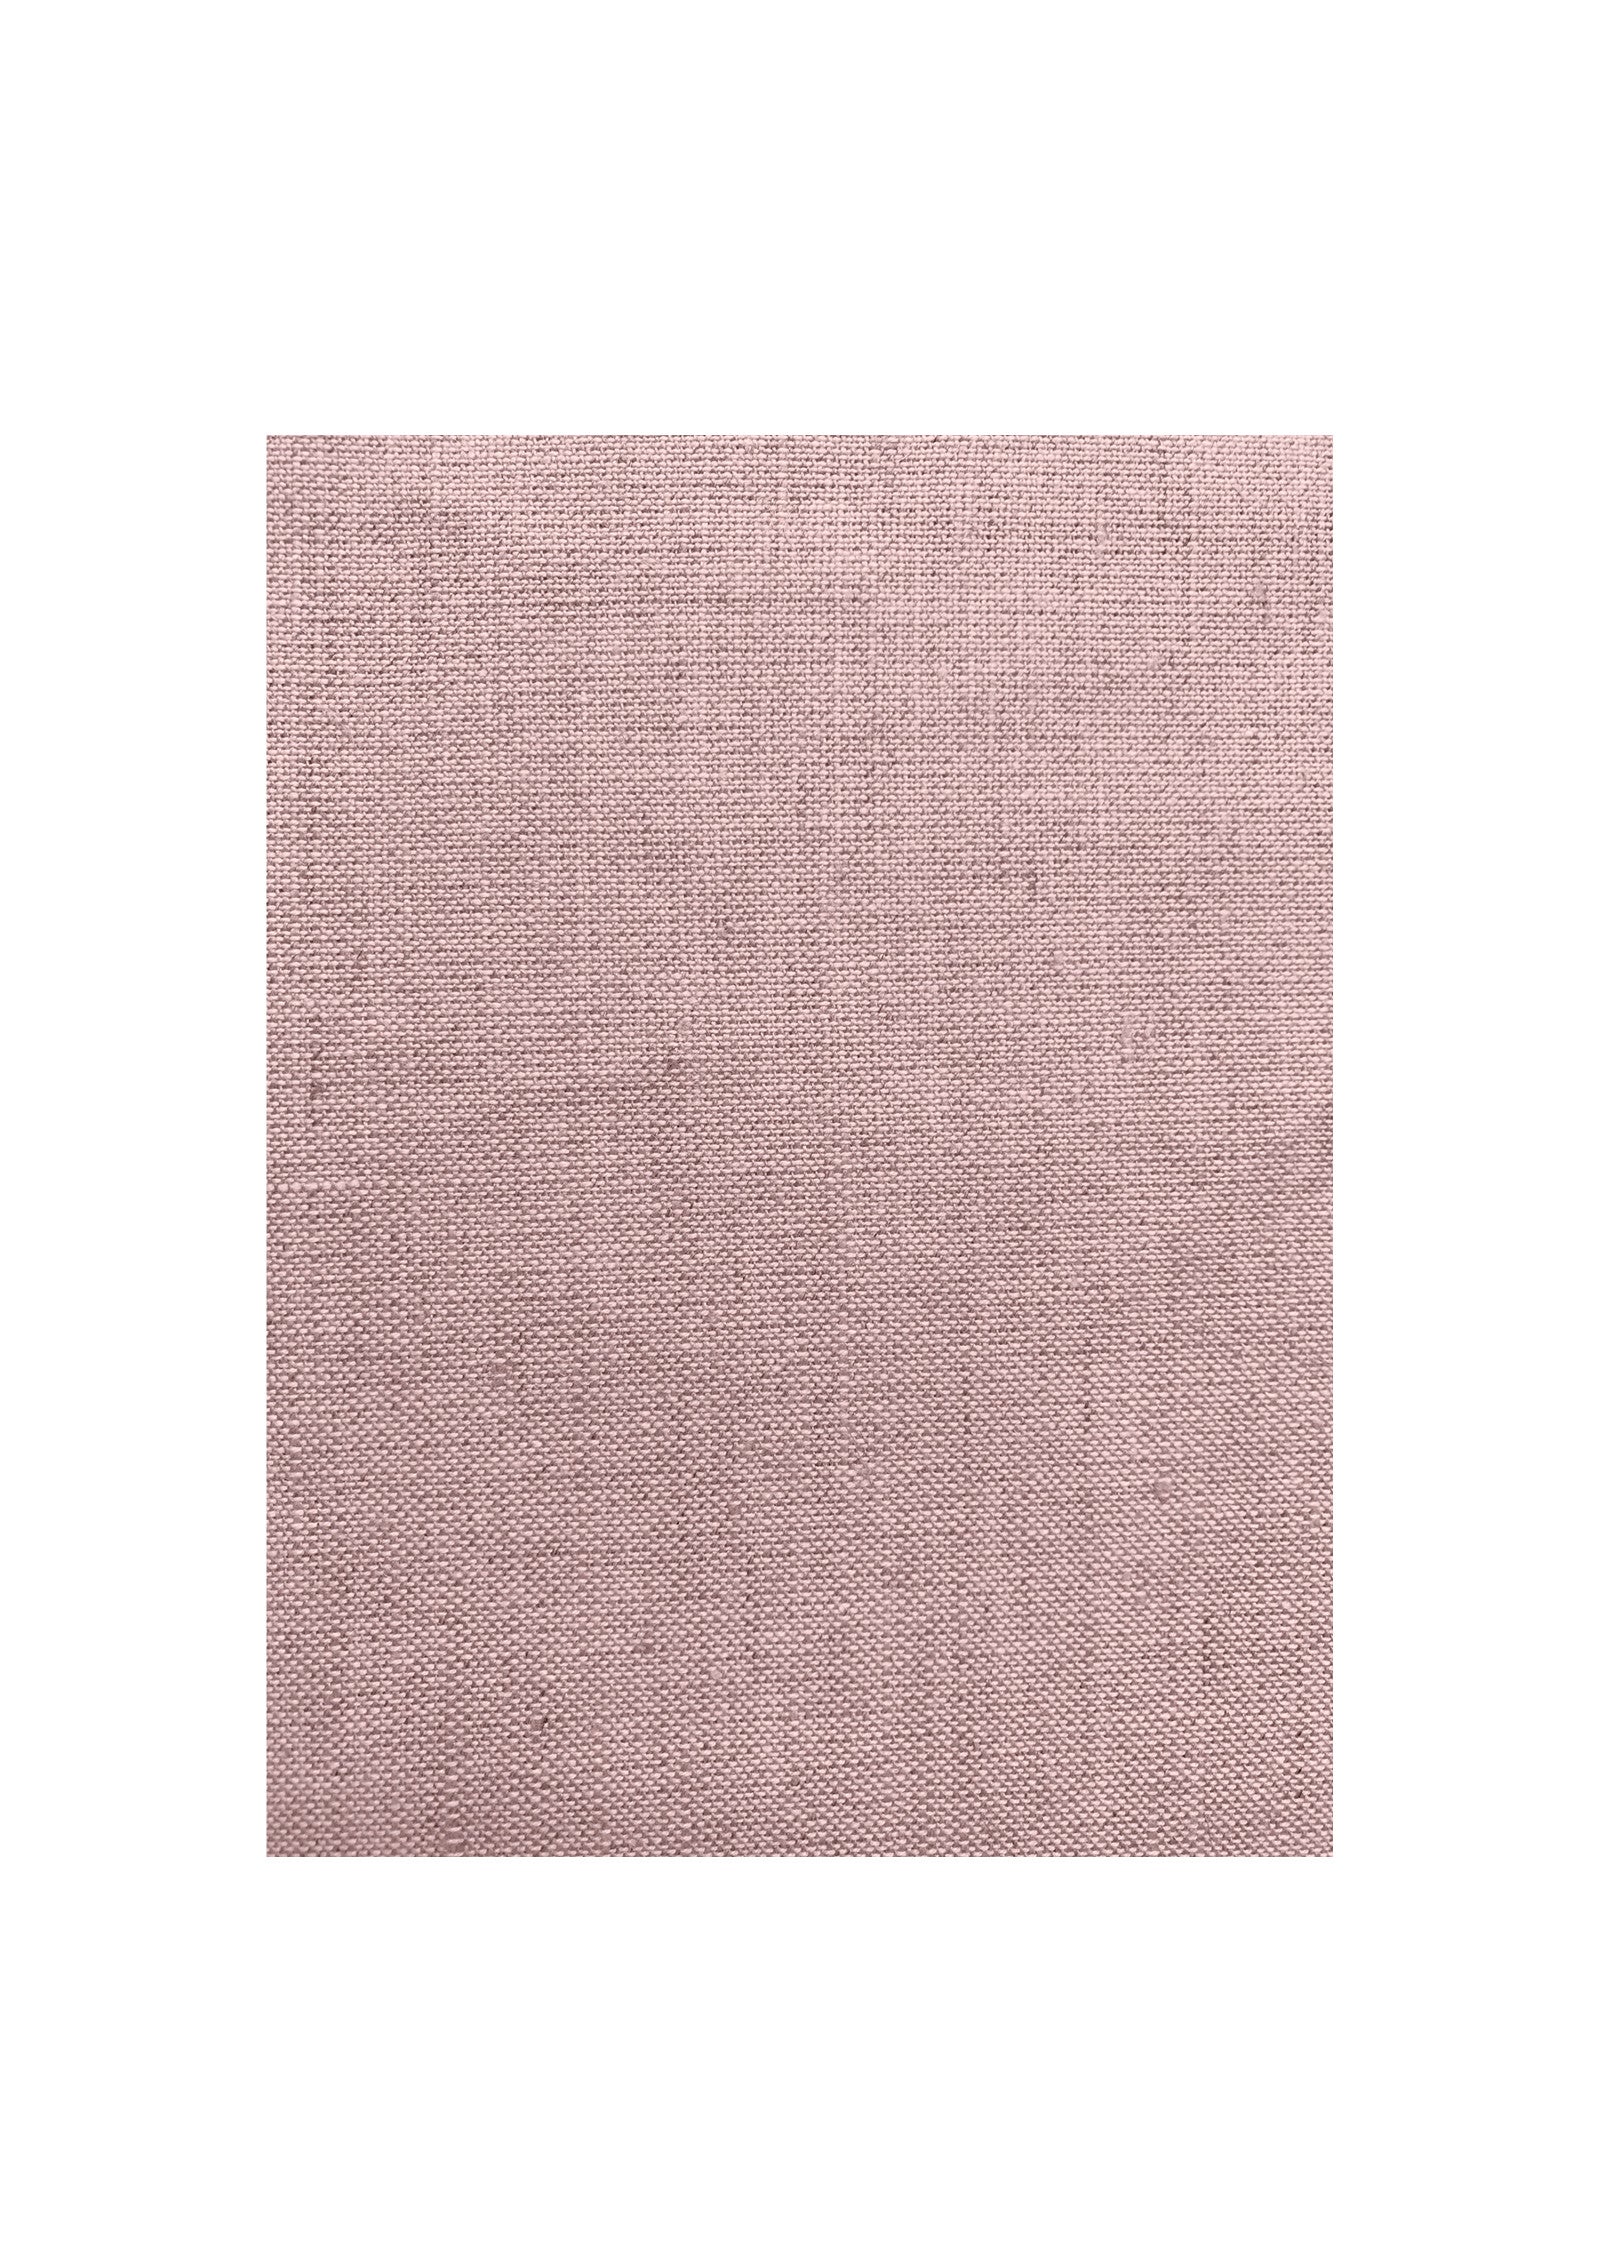 'Wood' Vorhang für Mini+ / rosa